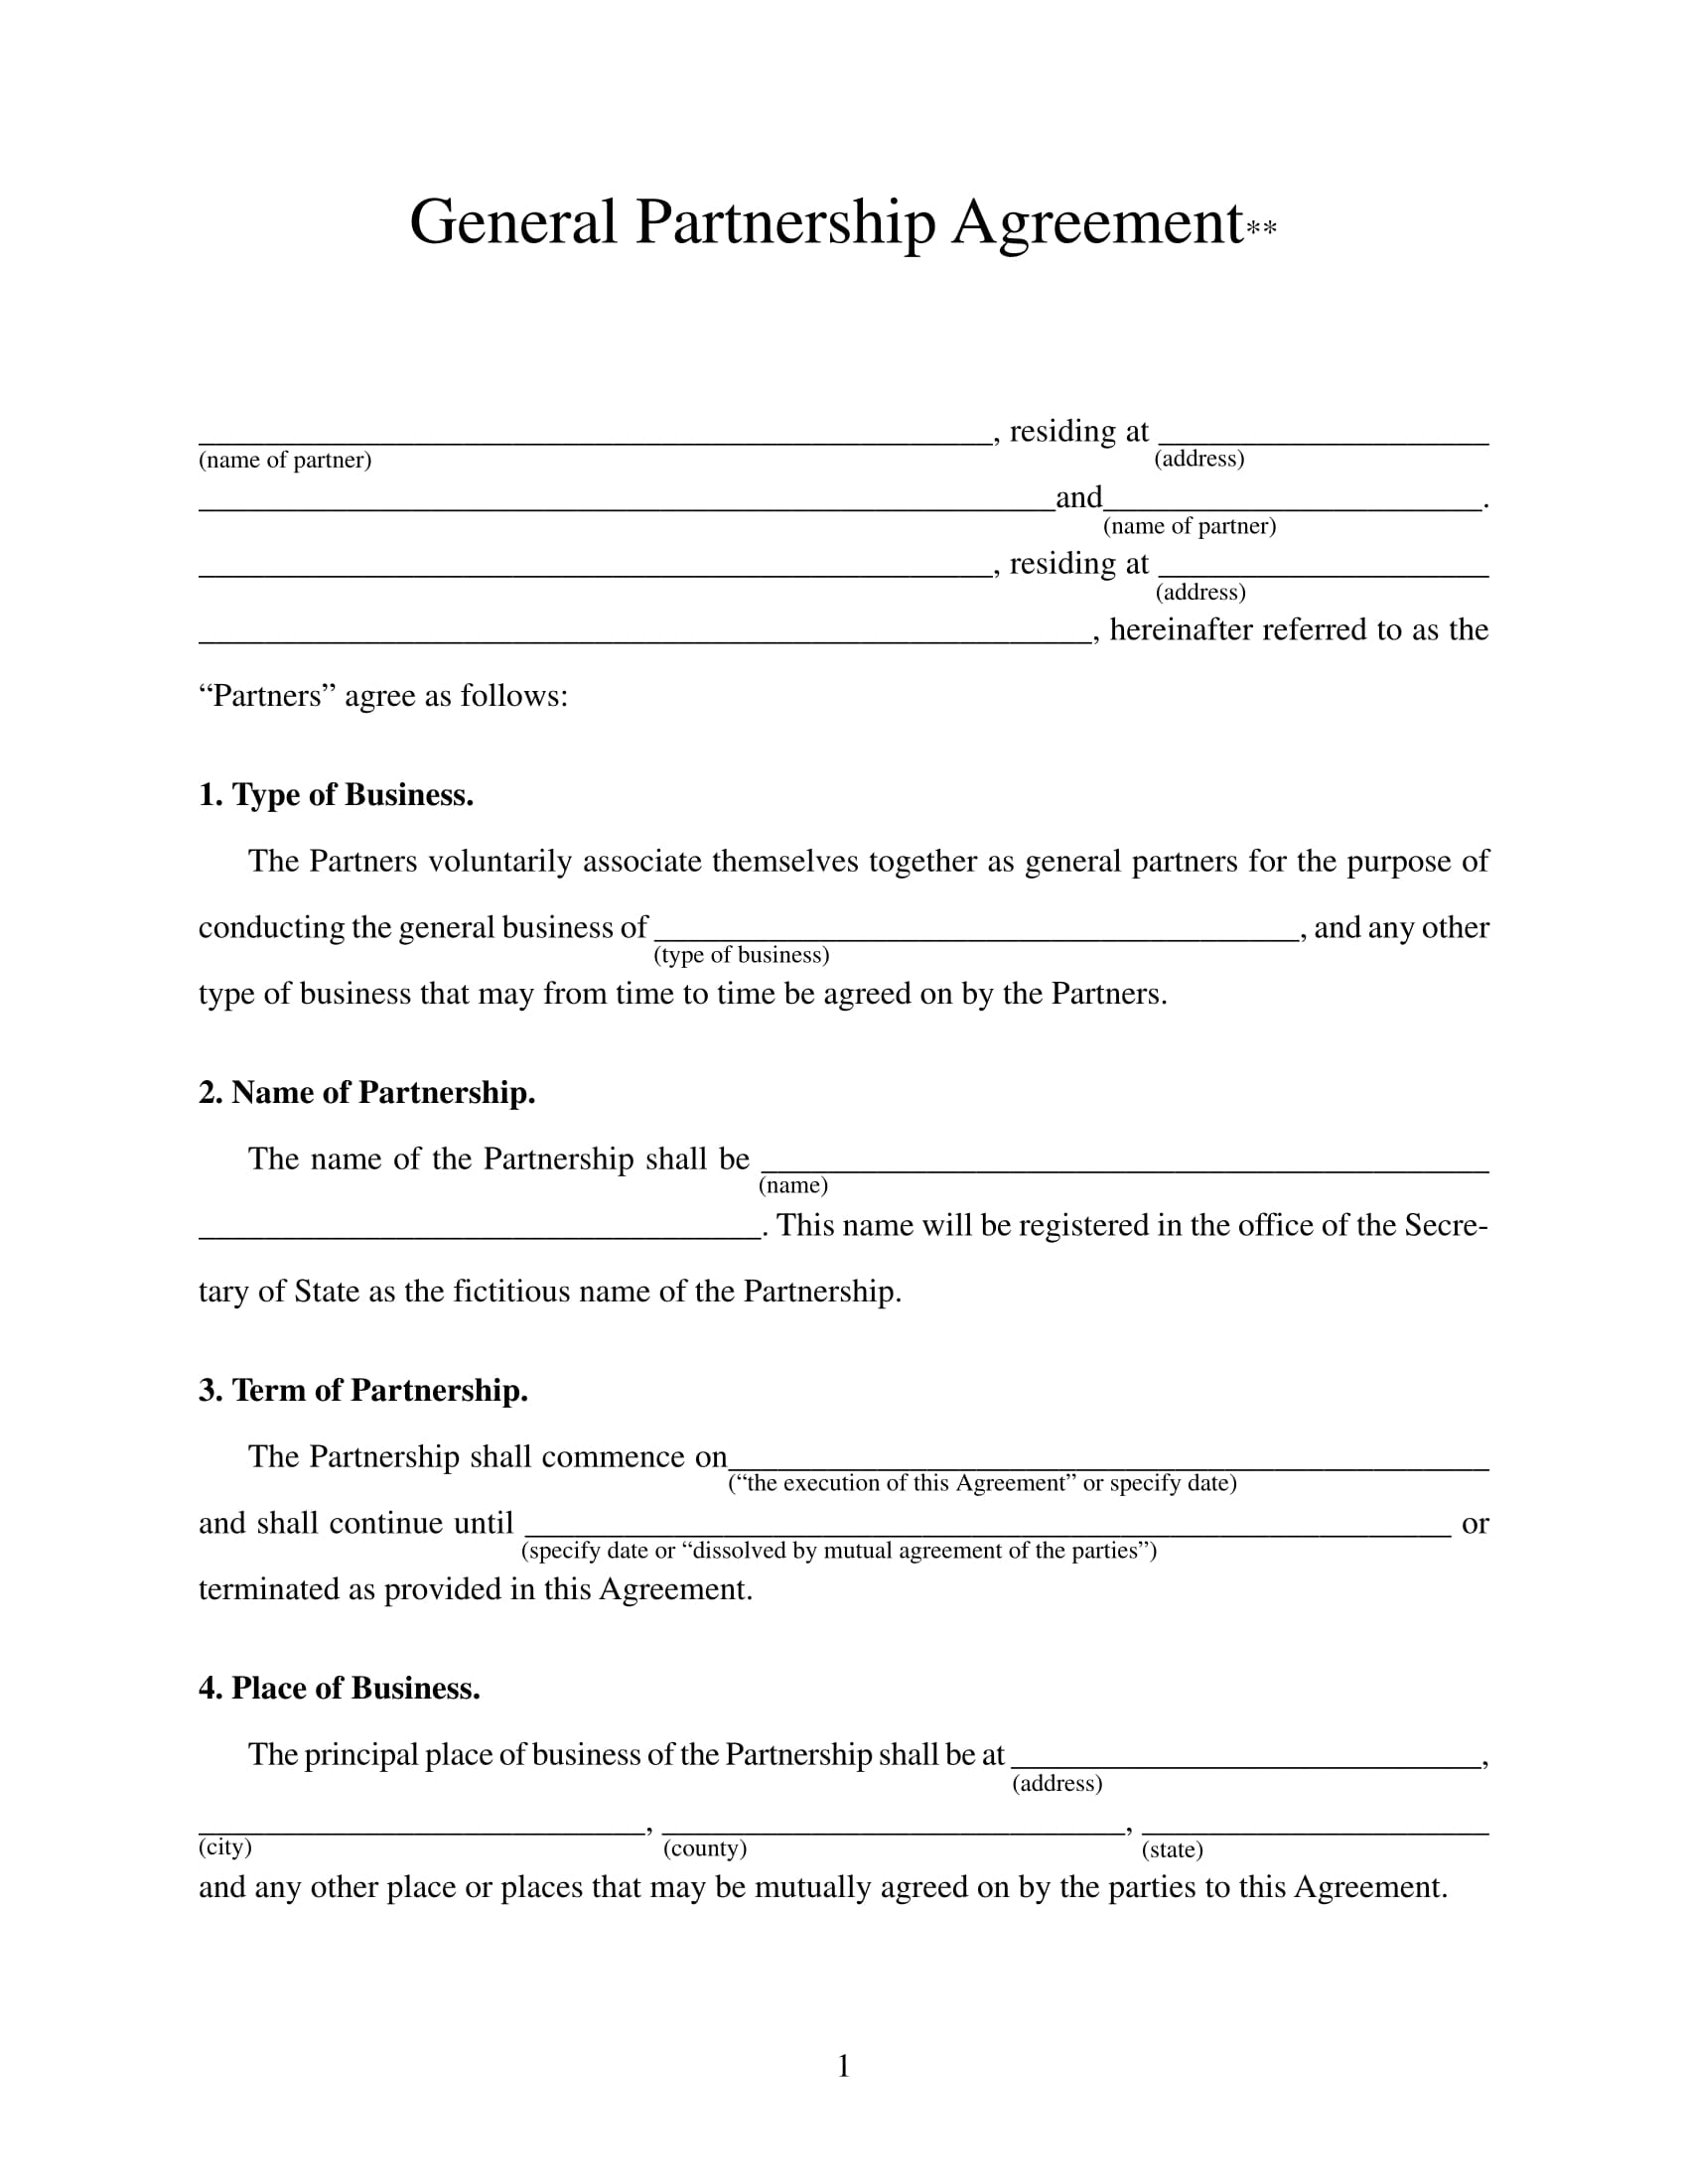 general partnership agreement form 1